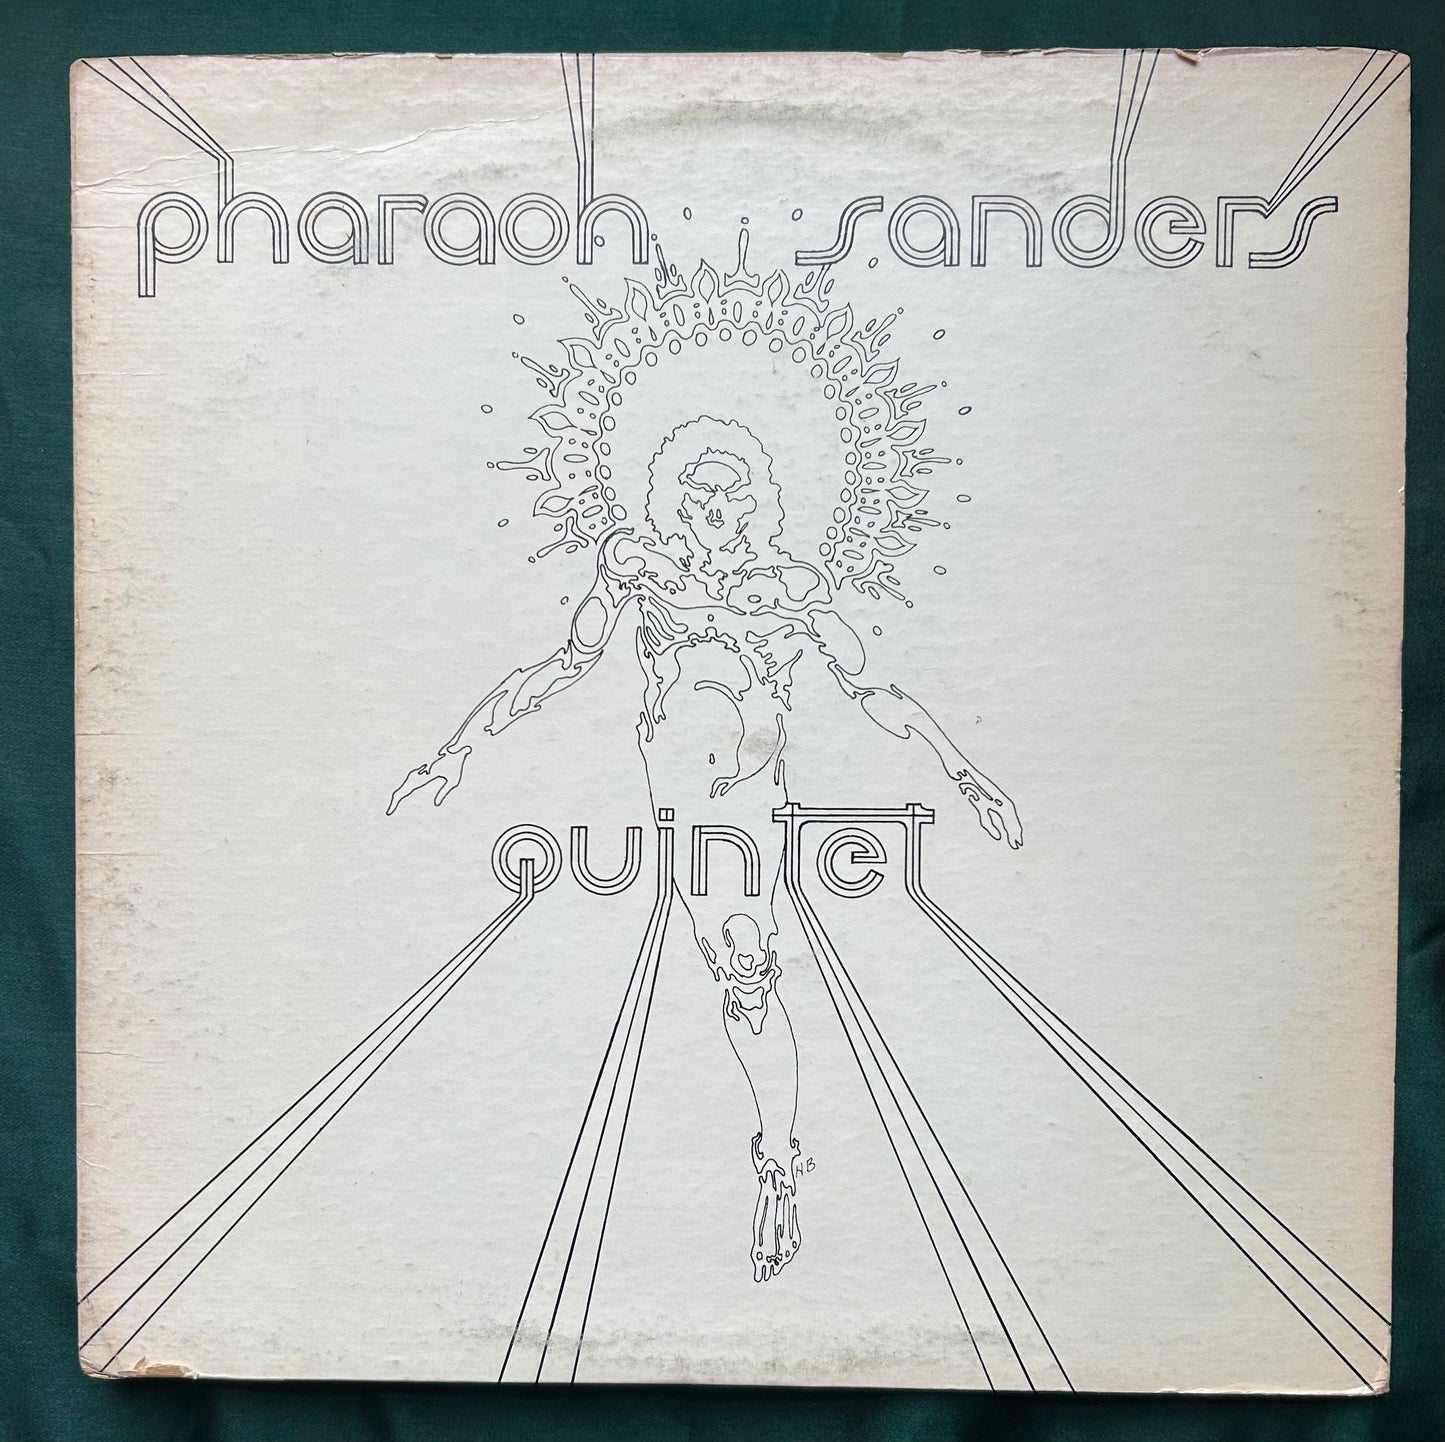 Pharoah Sanders - Quintet 1970 Repress ESP-Disk Alt. Cover. Pharoah's 1st lp